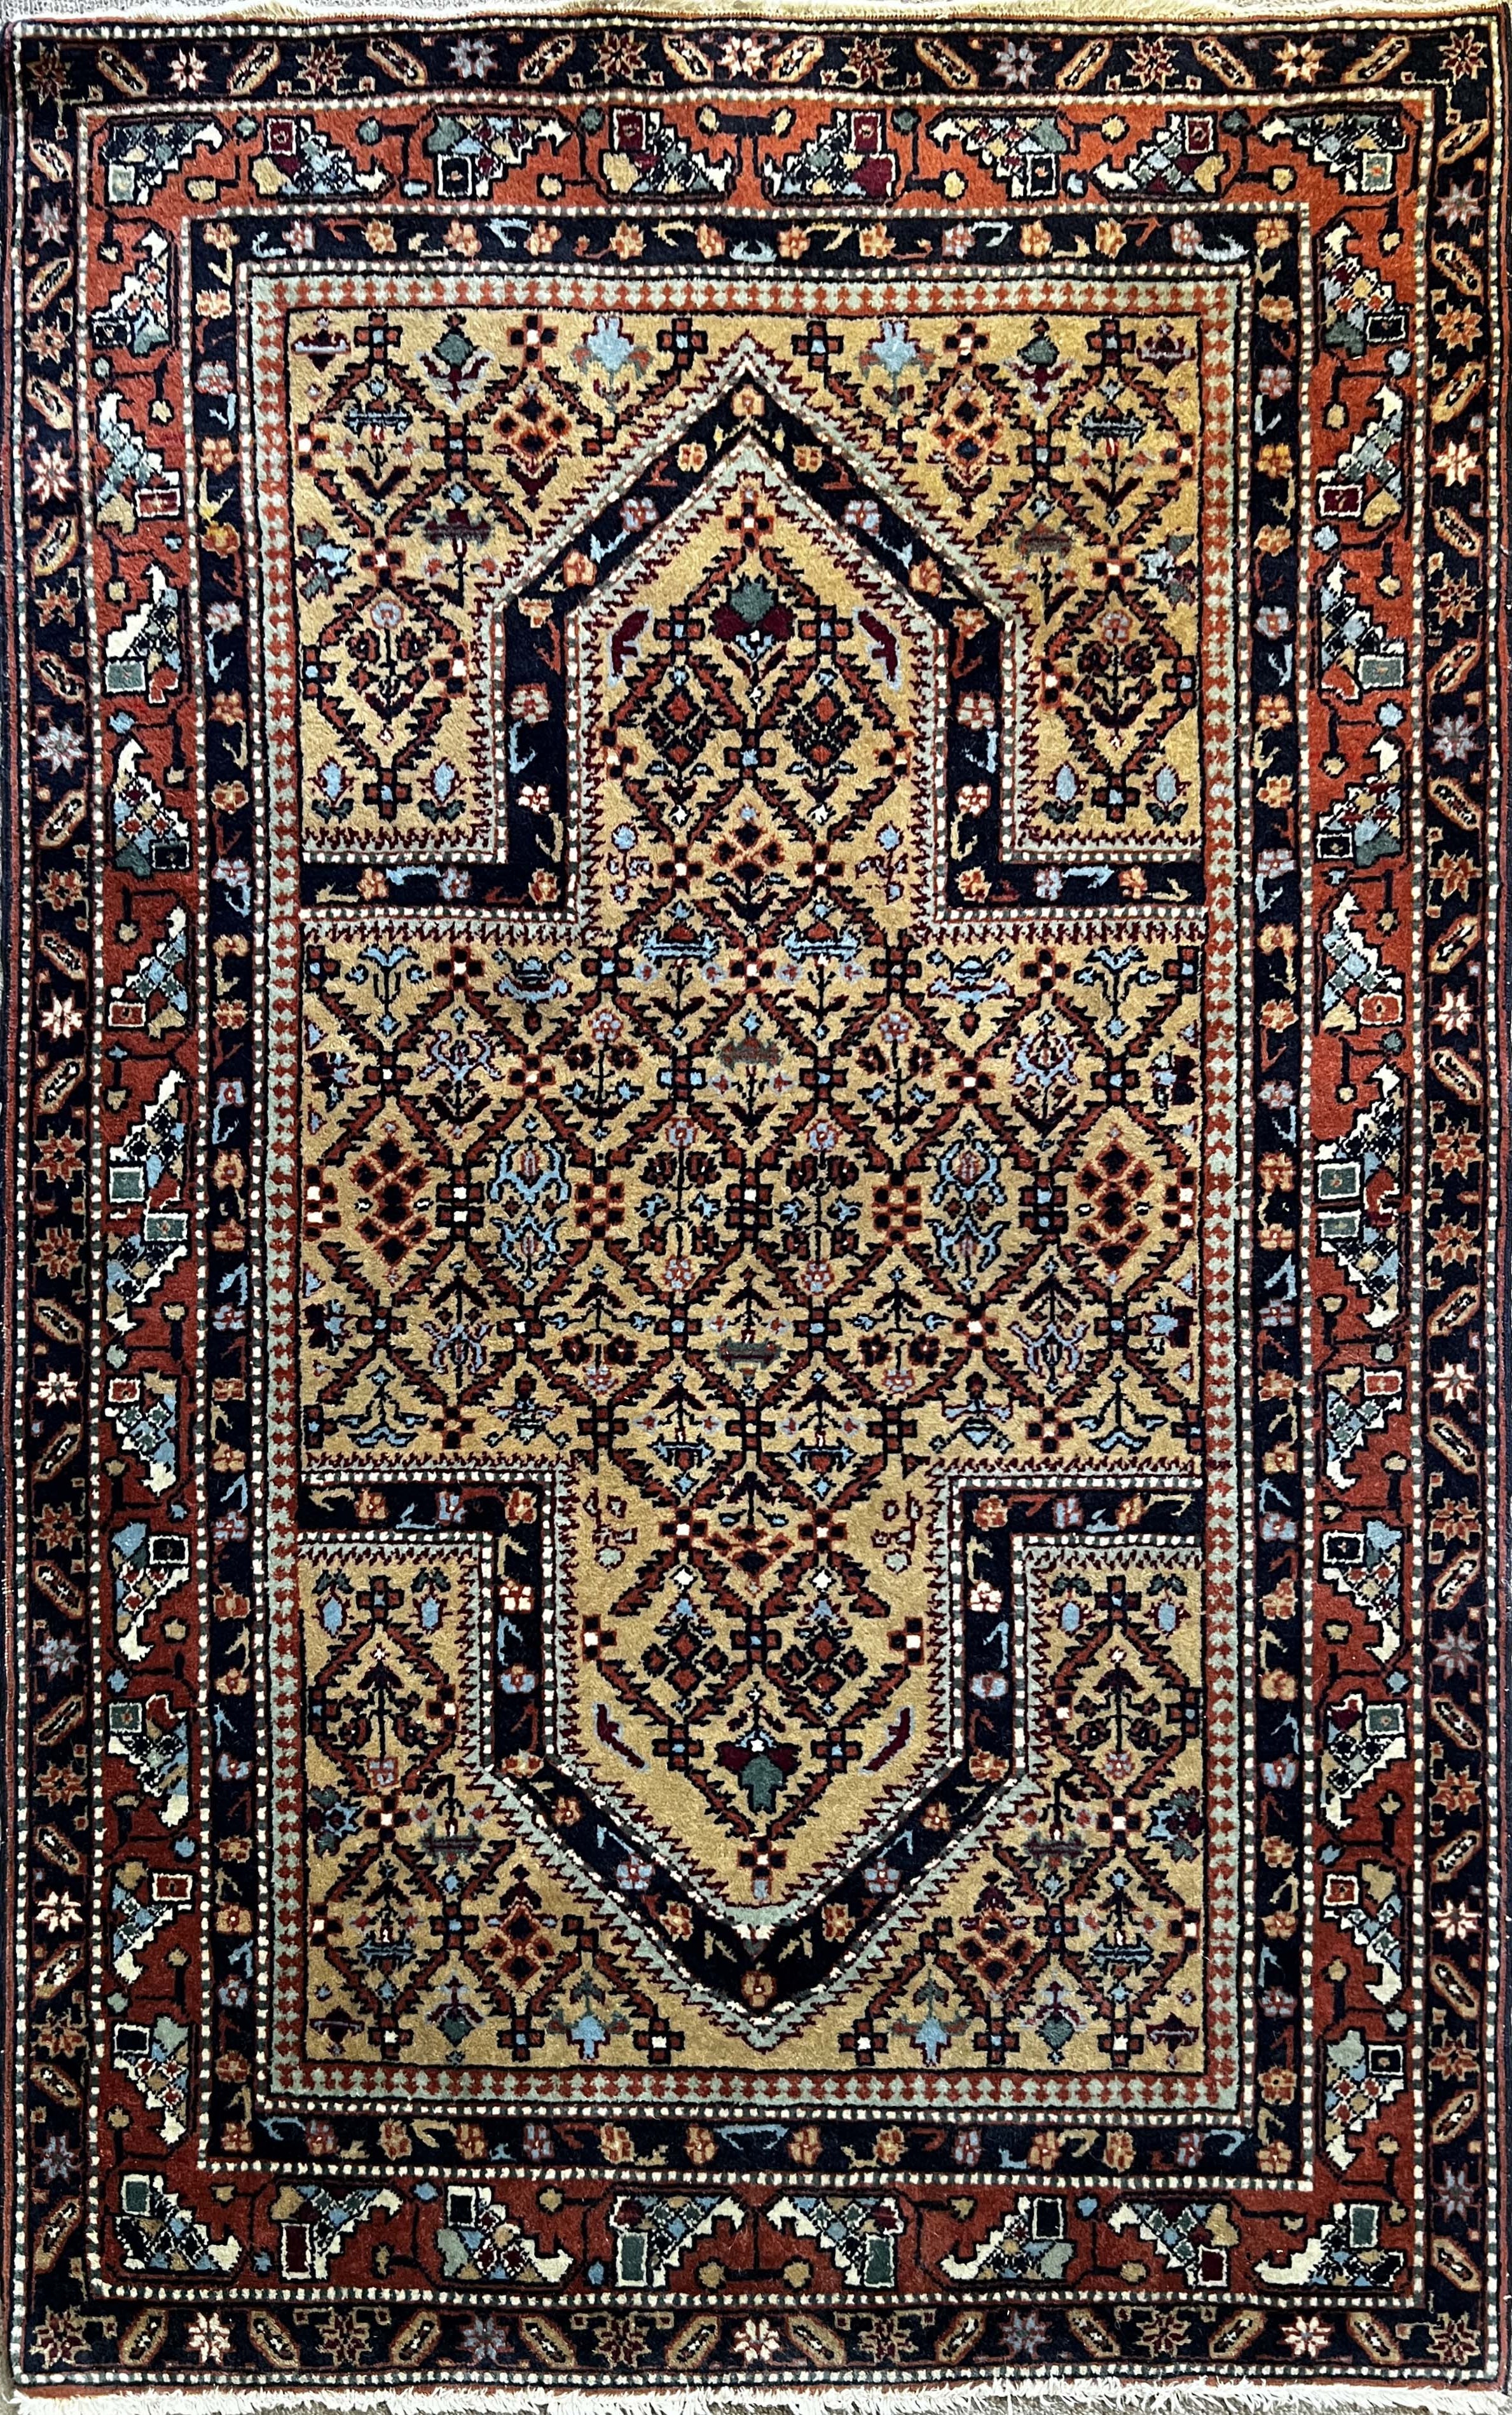  Caucasian Chirvan Carpet, 19th Century - N° 730 For Sale